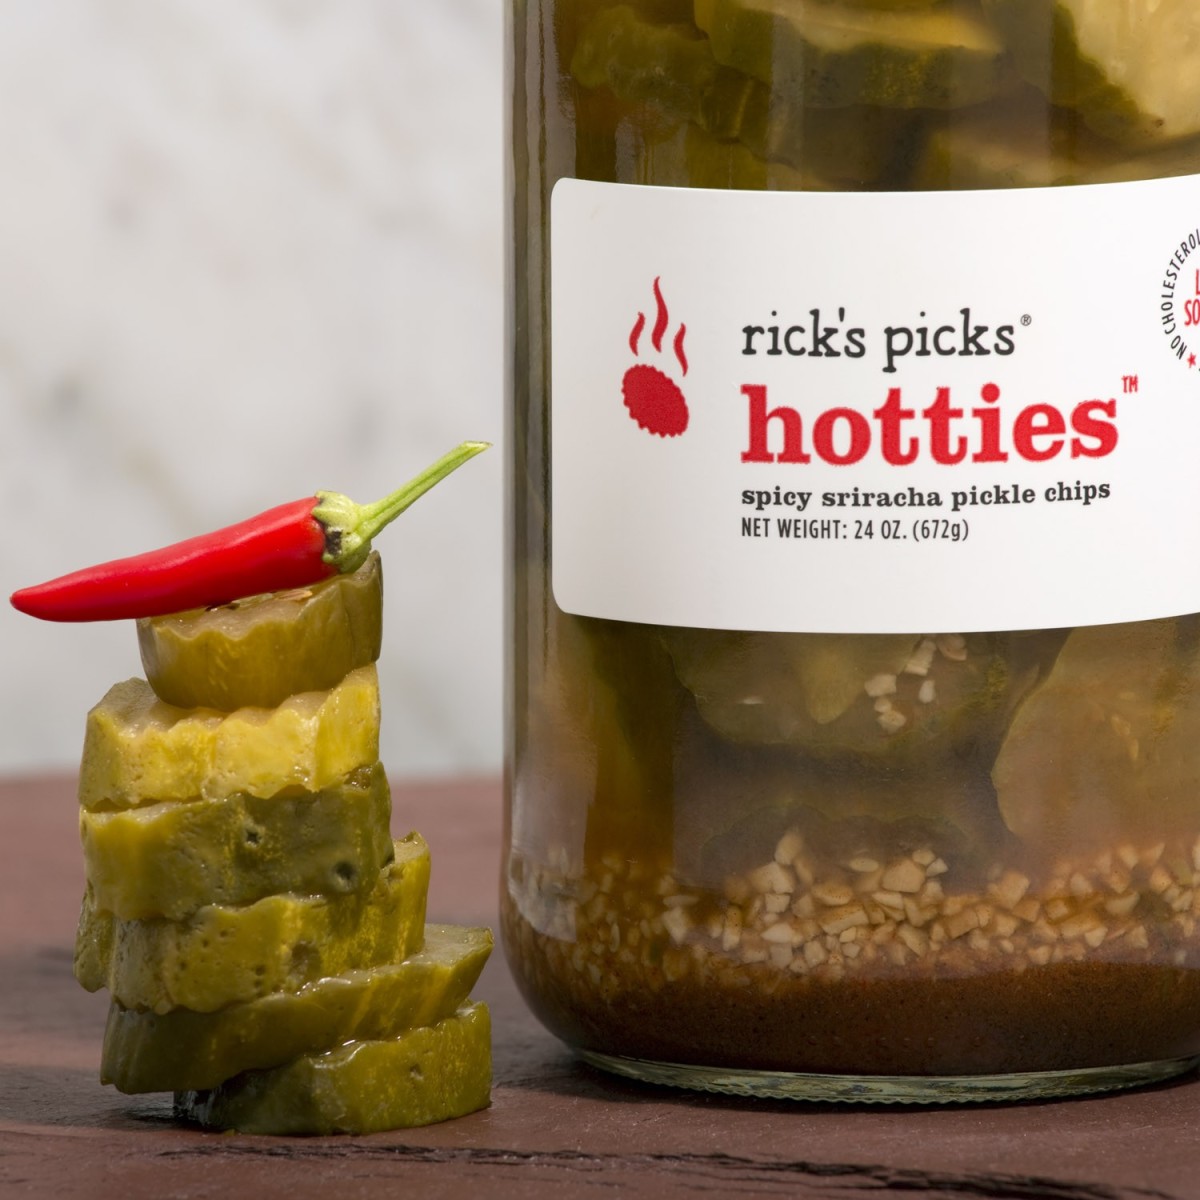 Rick's picks hotties